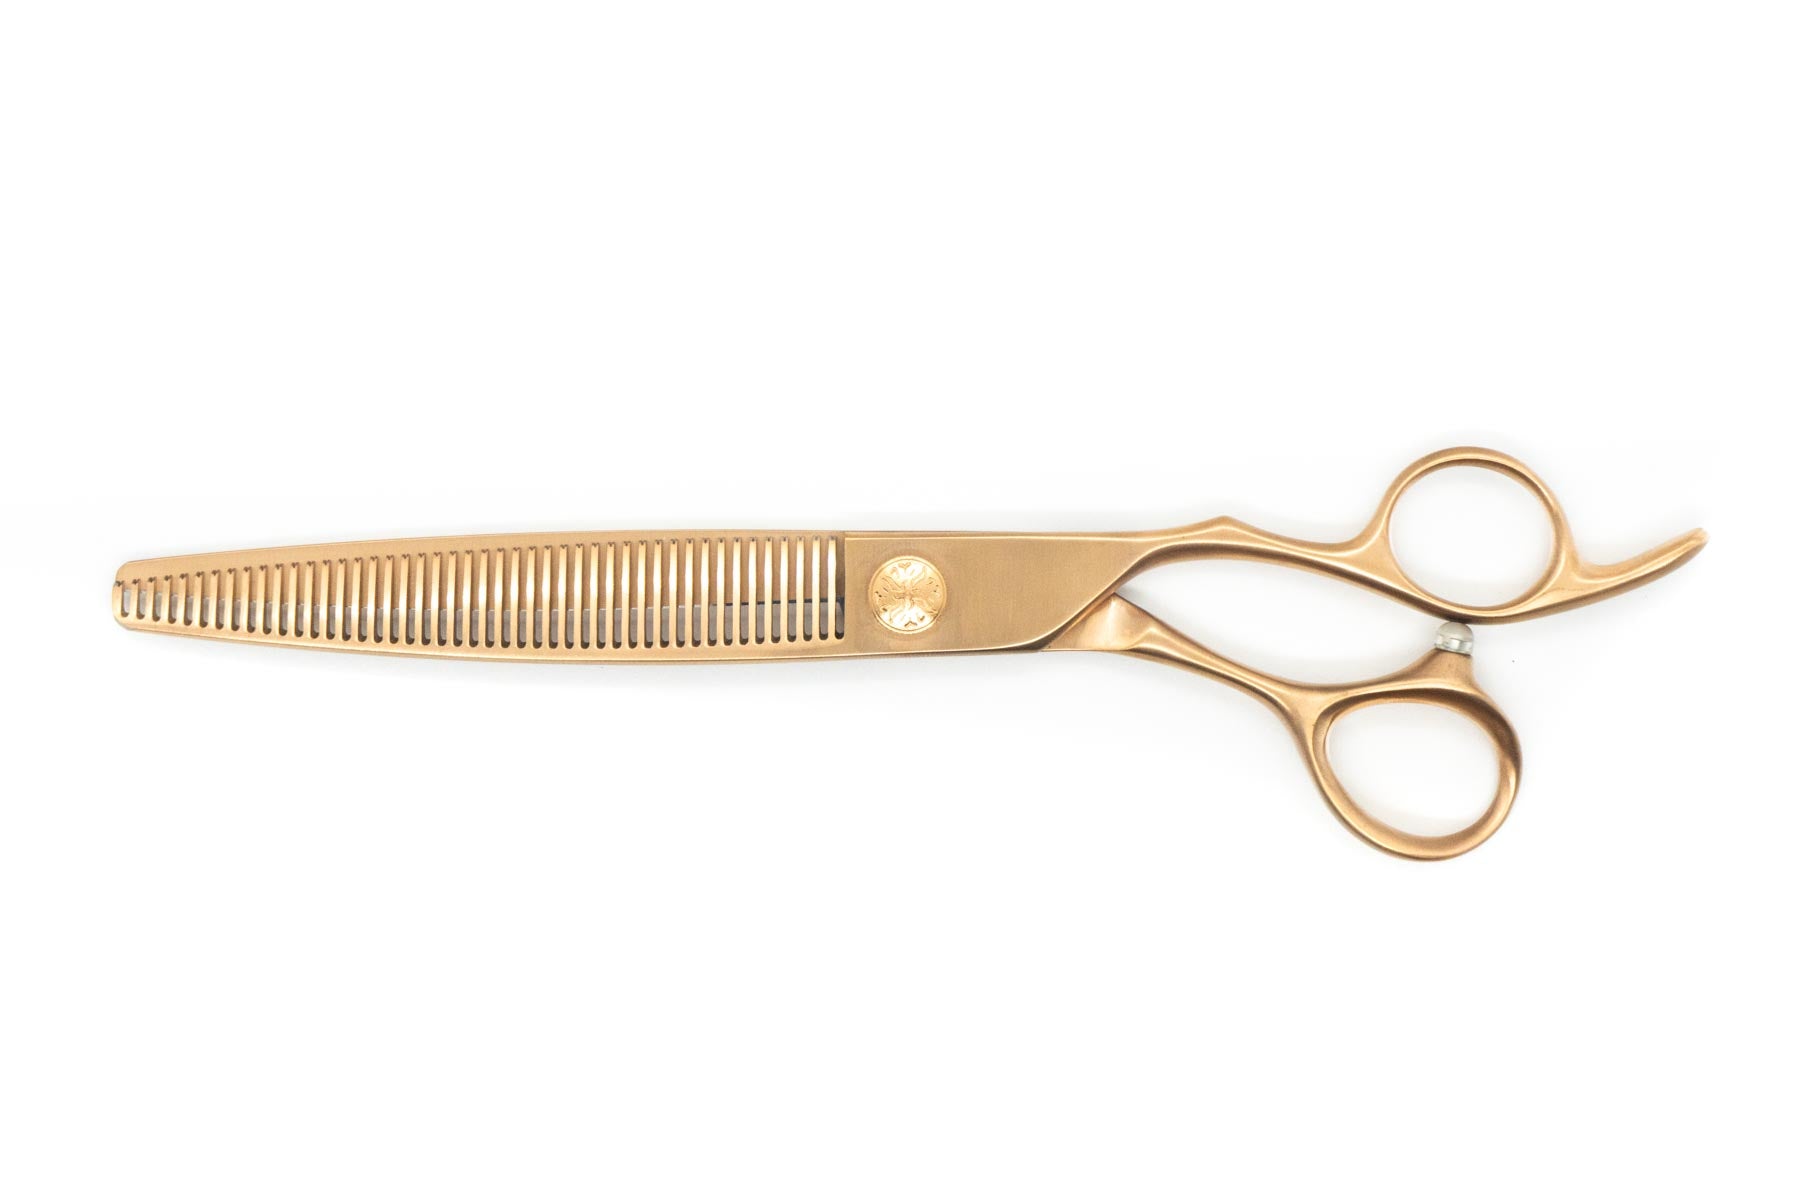 Aspen Lt Rose Gold Pet Grooming 7.5 inch Thinning Scissor